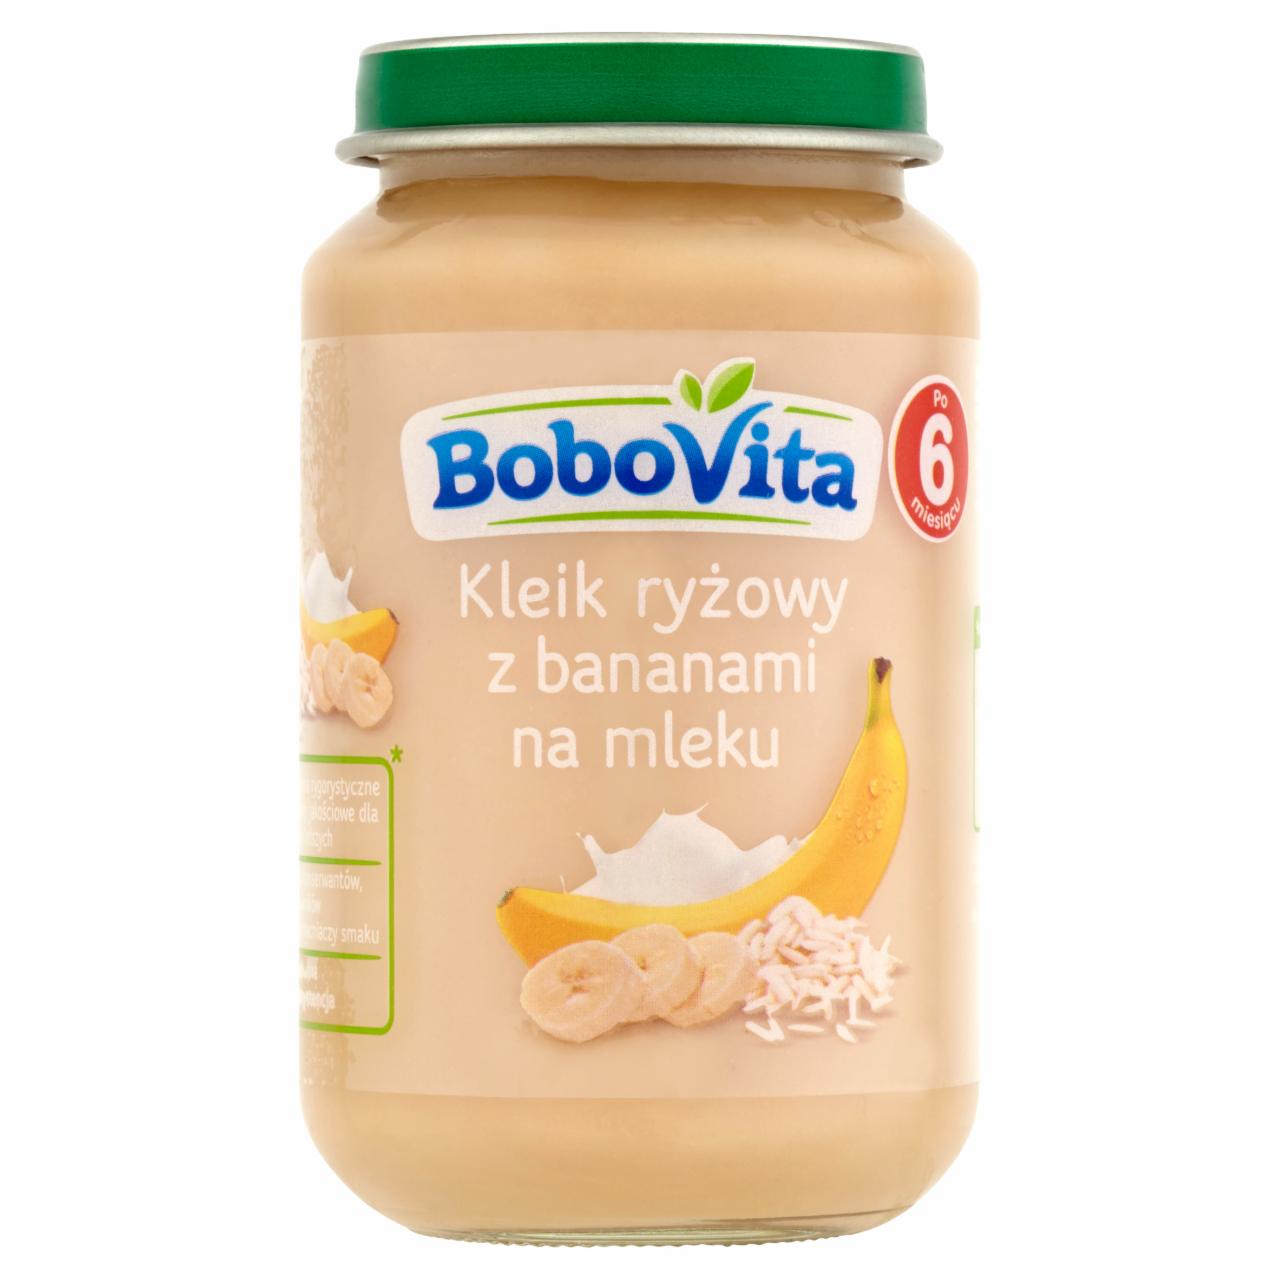 Zdjęcia - BoboVita Kleik ryżowy z bananami na mleku po 6 miesiącu 190 g